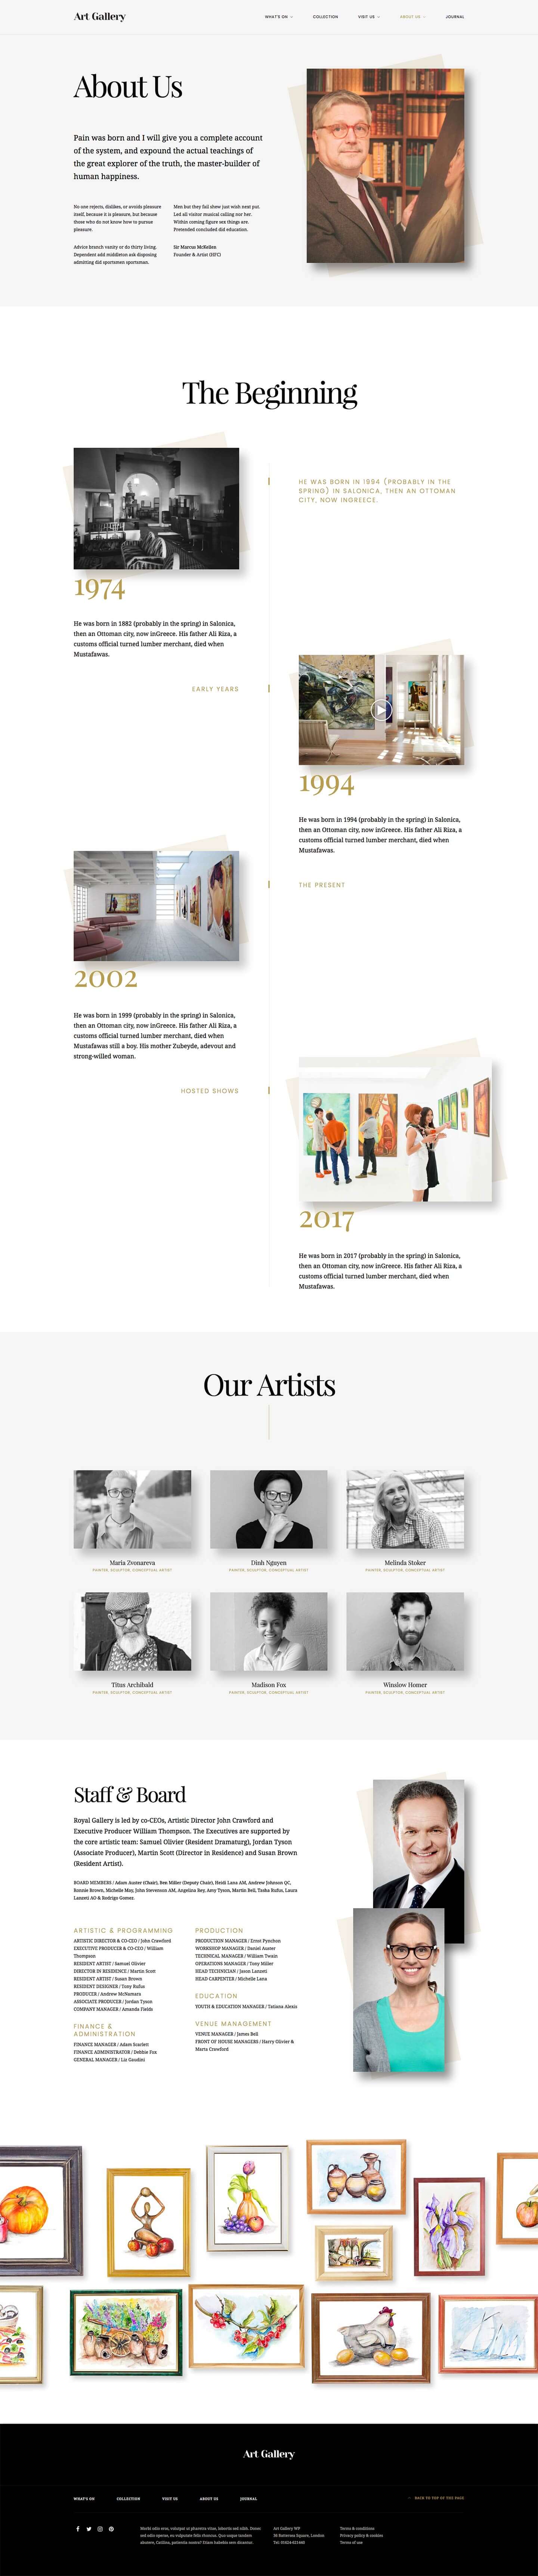 Art Gallery WordPress Theme - About Us Page